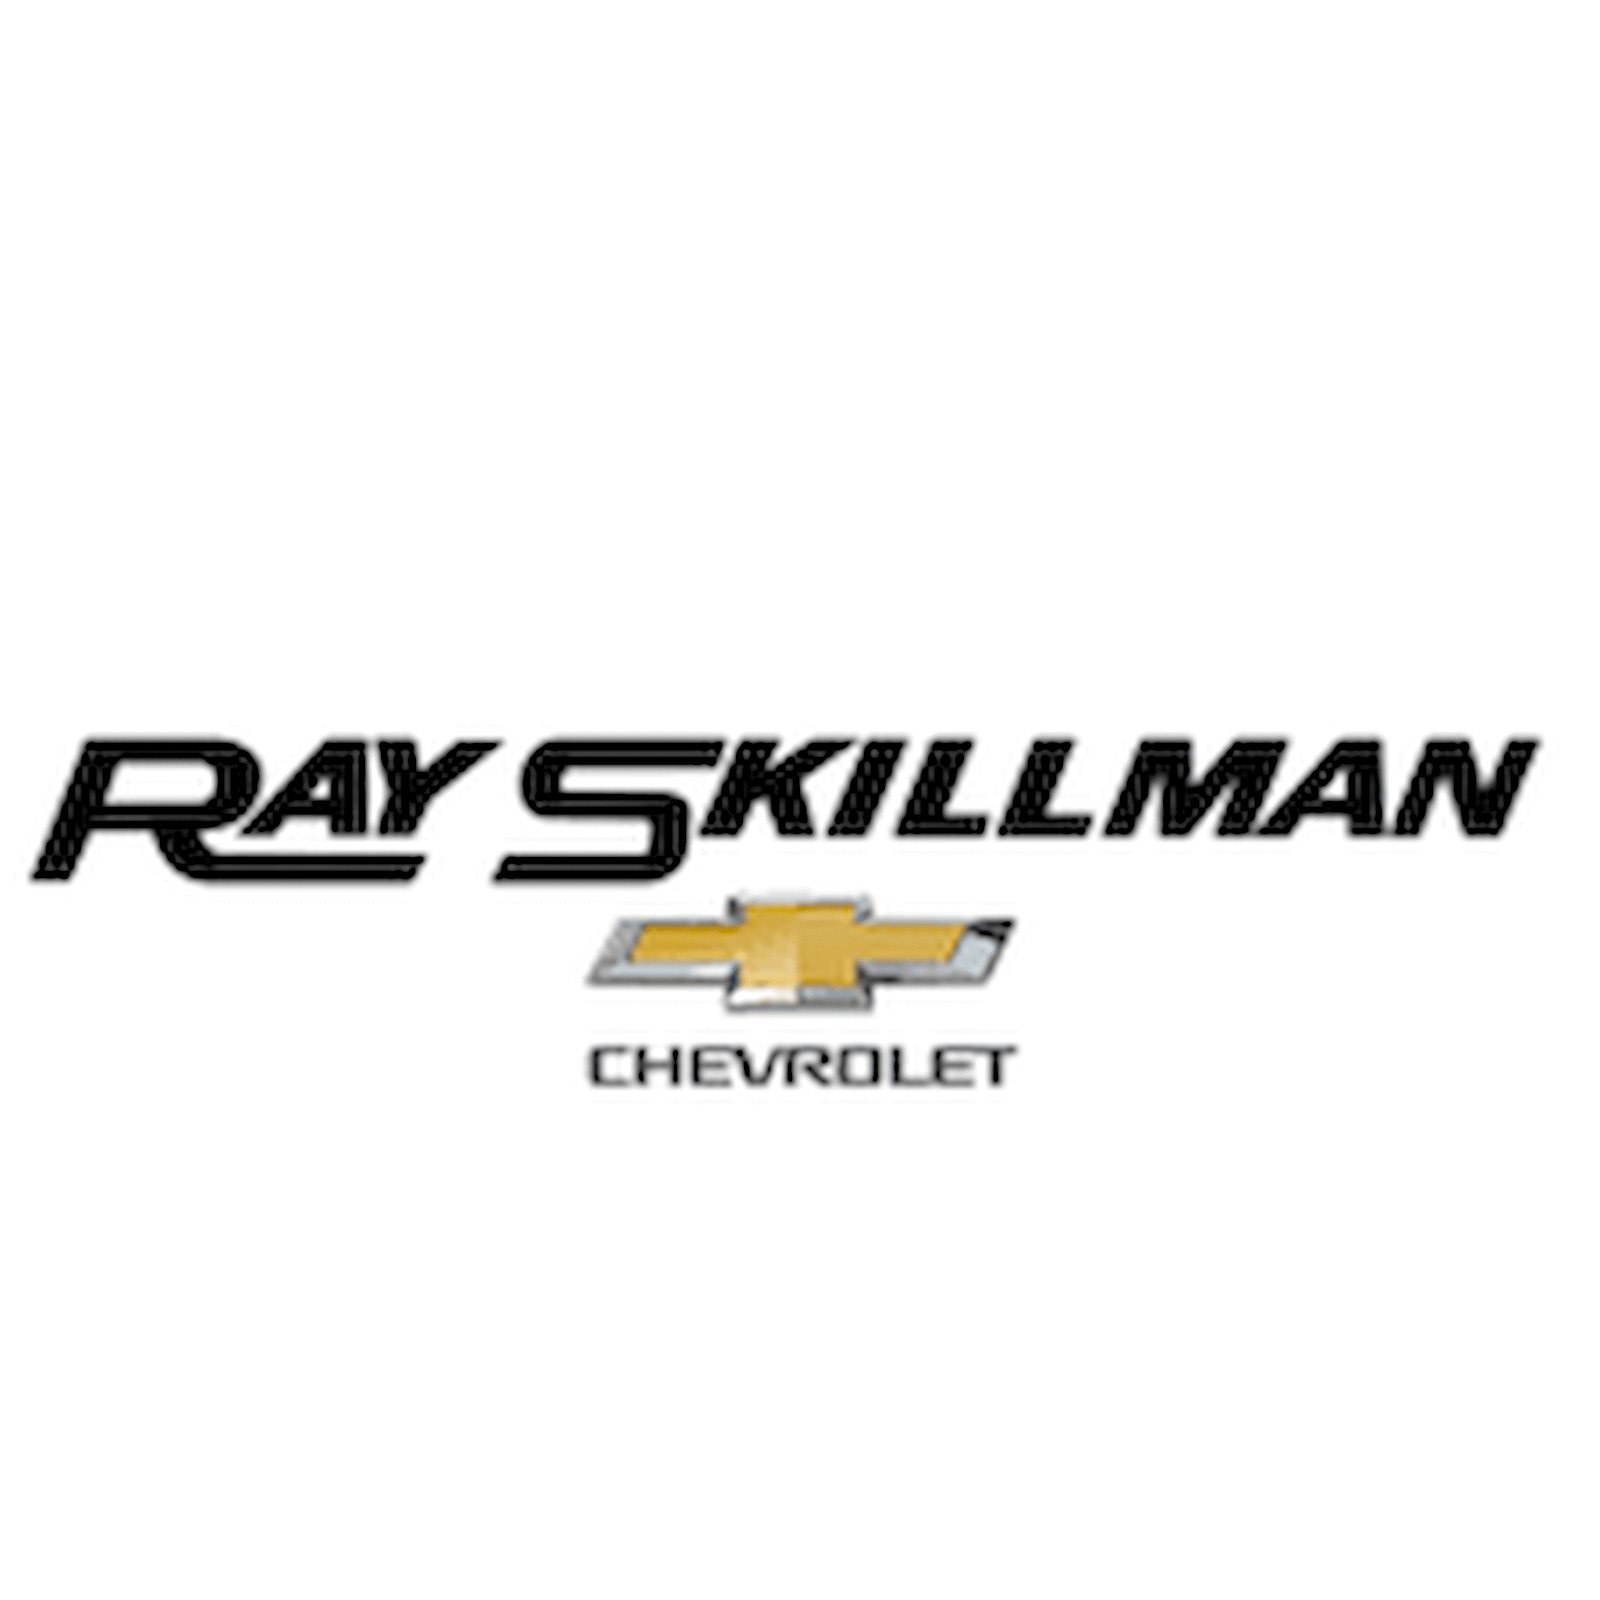 Ray Skillman